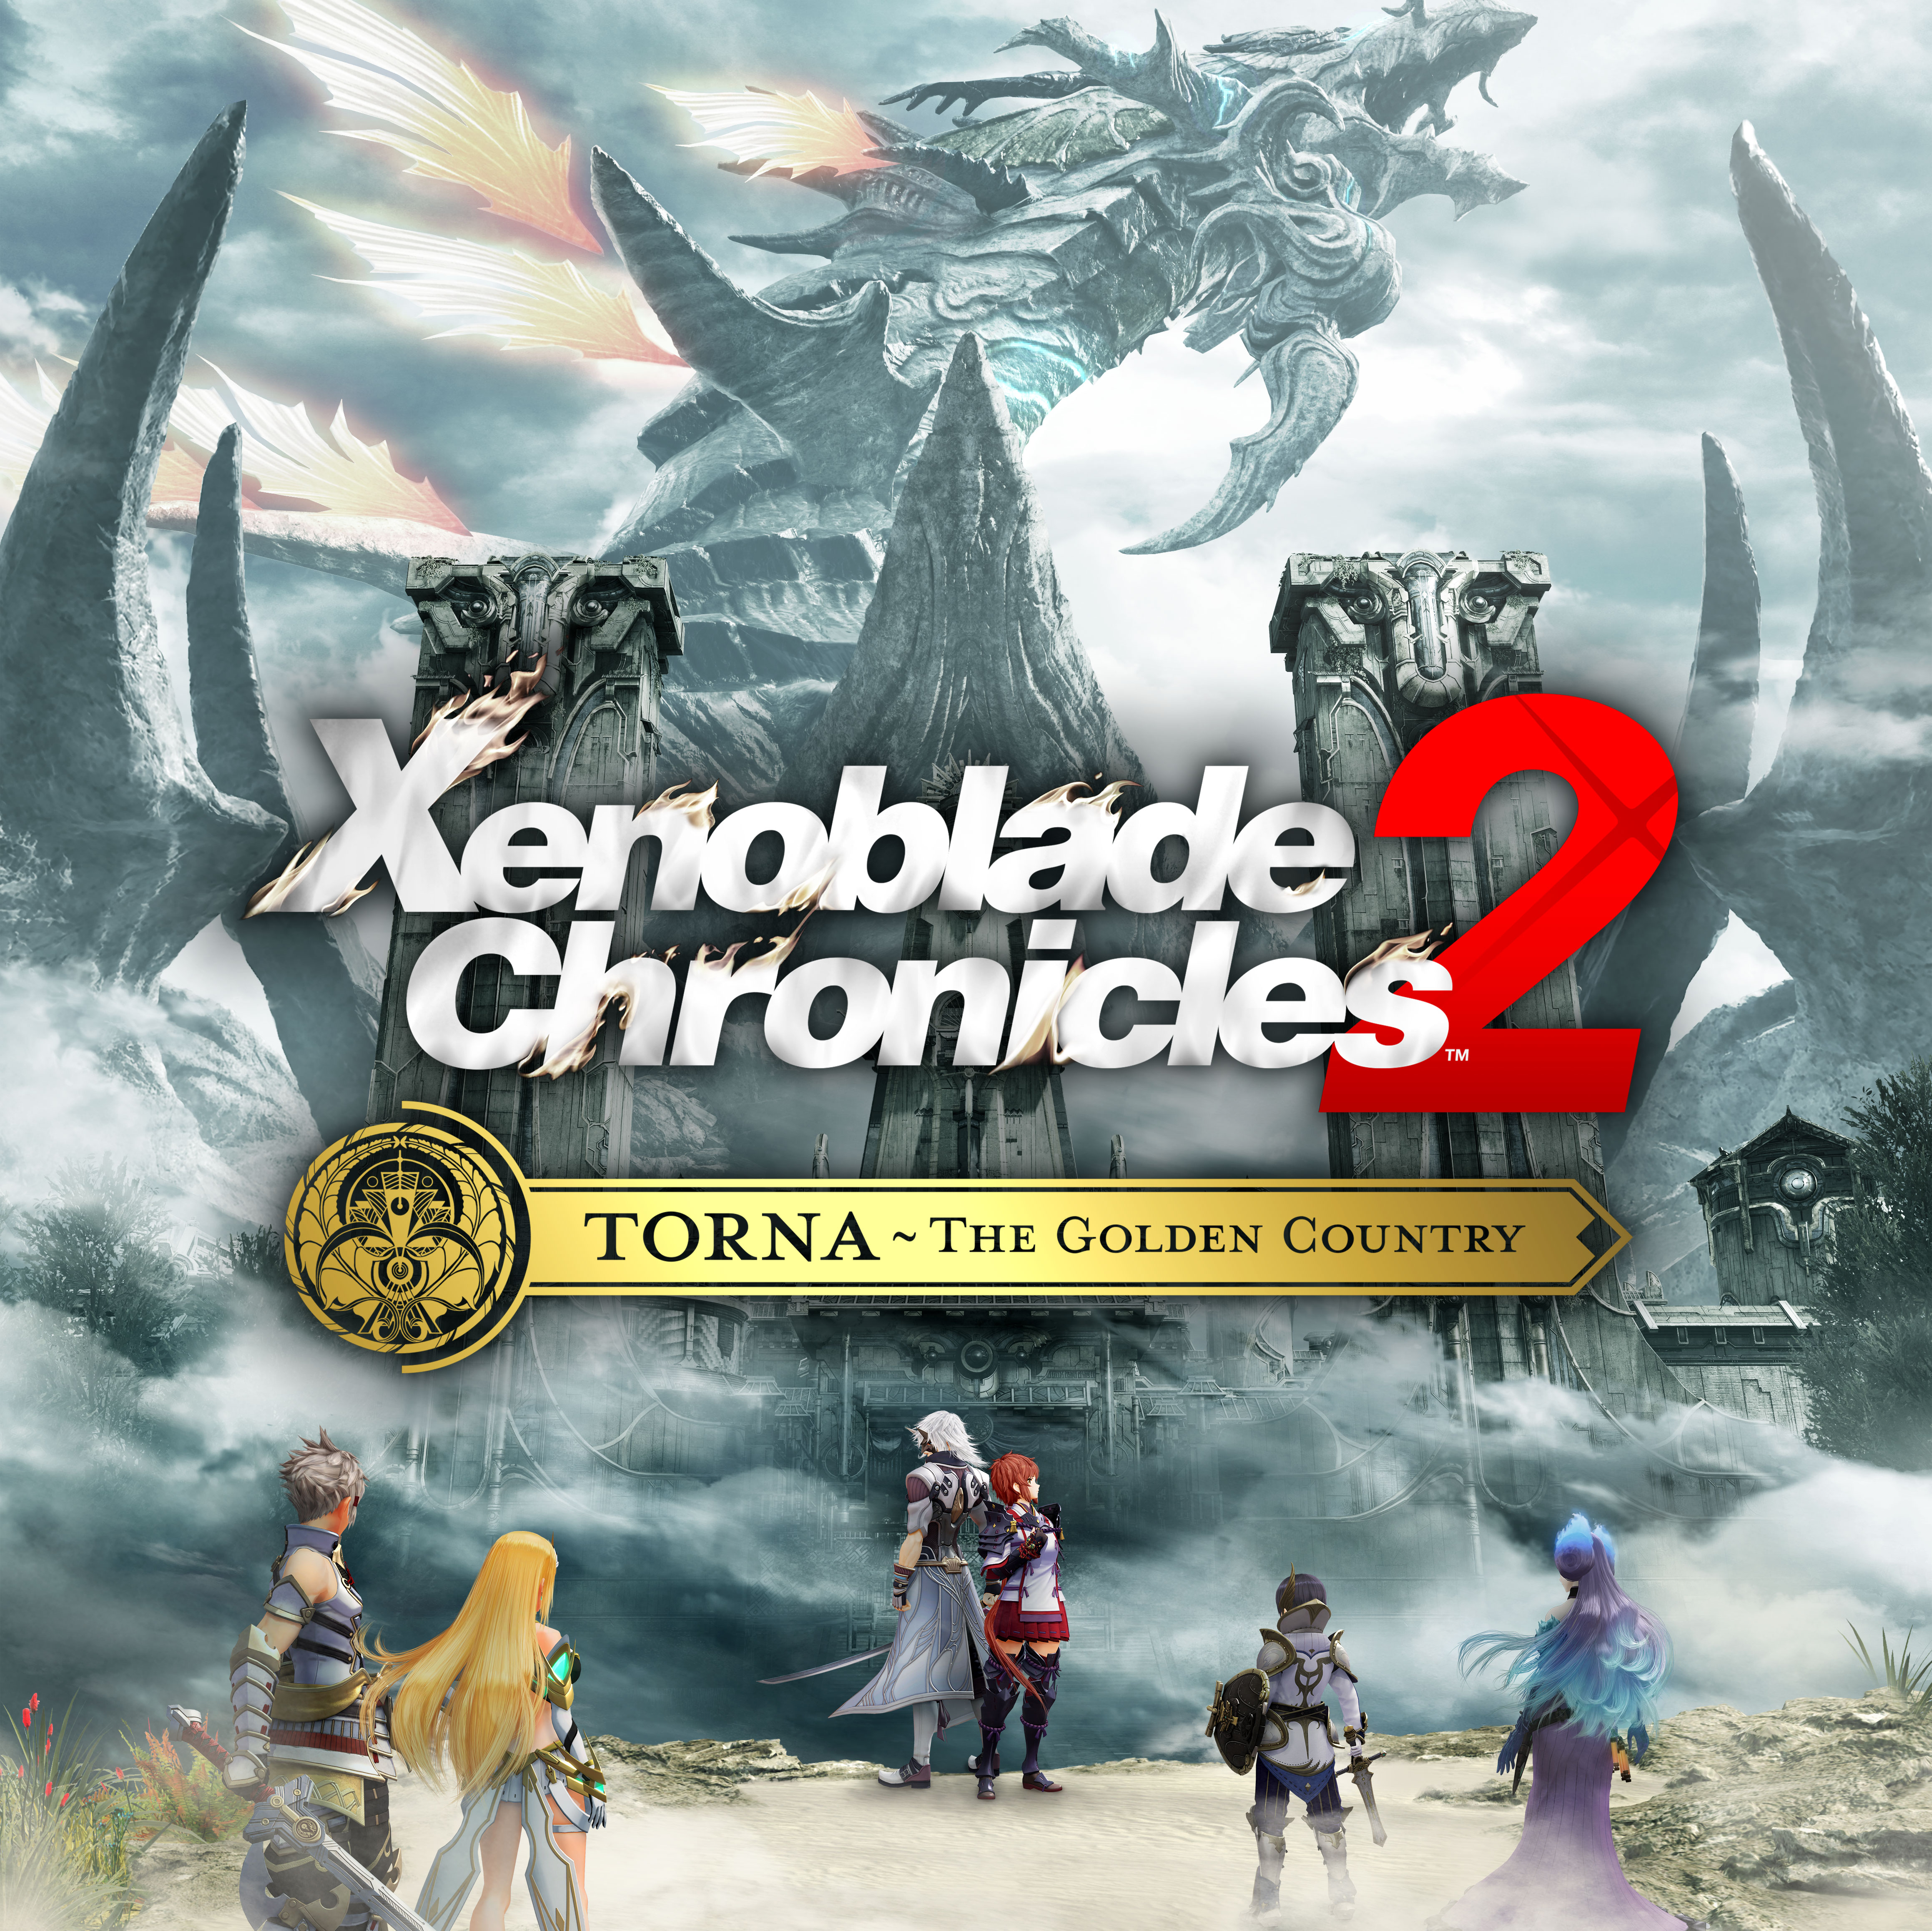 Tetsuya Takahasi de Monolith Soft nous en dit plus sur Xenoblade Chronicles 2: Torna - The Golden Country